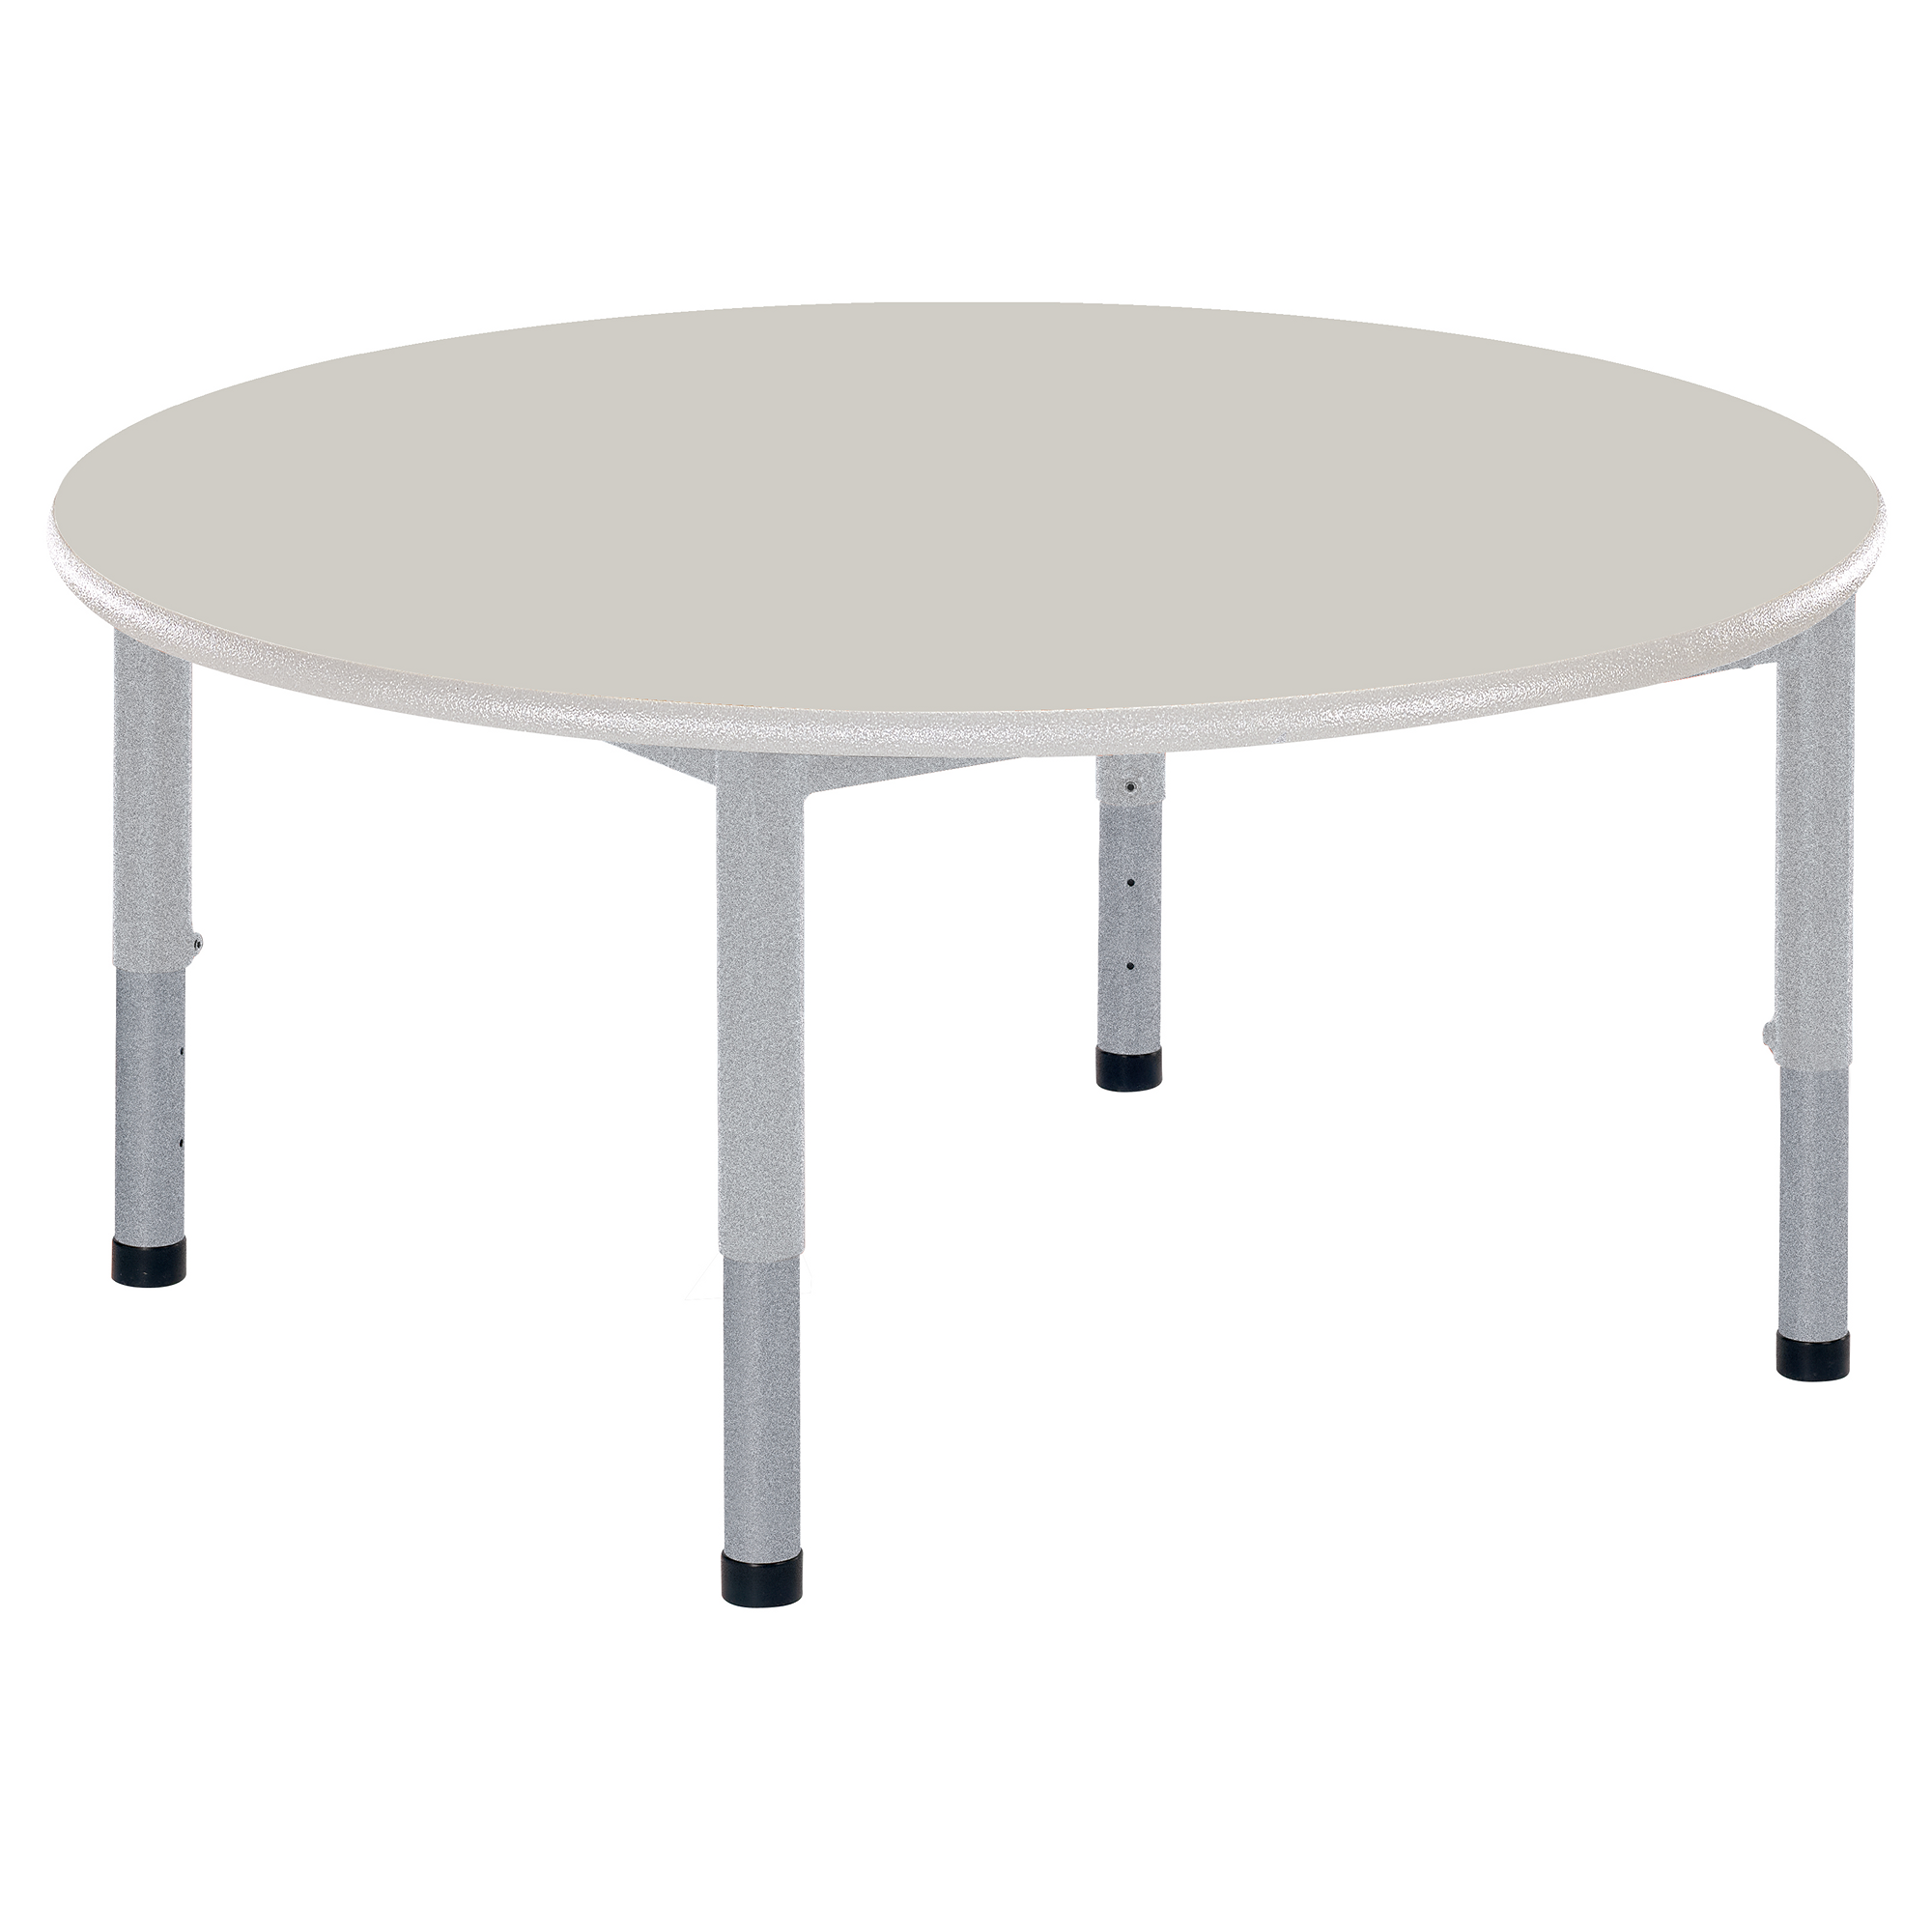 Harl Circular Table Wbrd Top H400-640mm